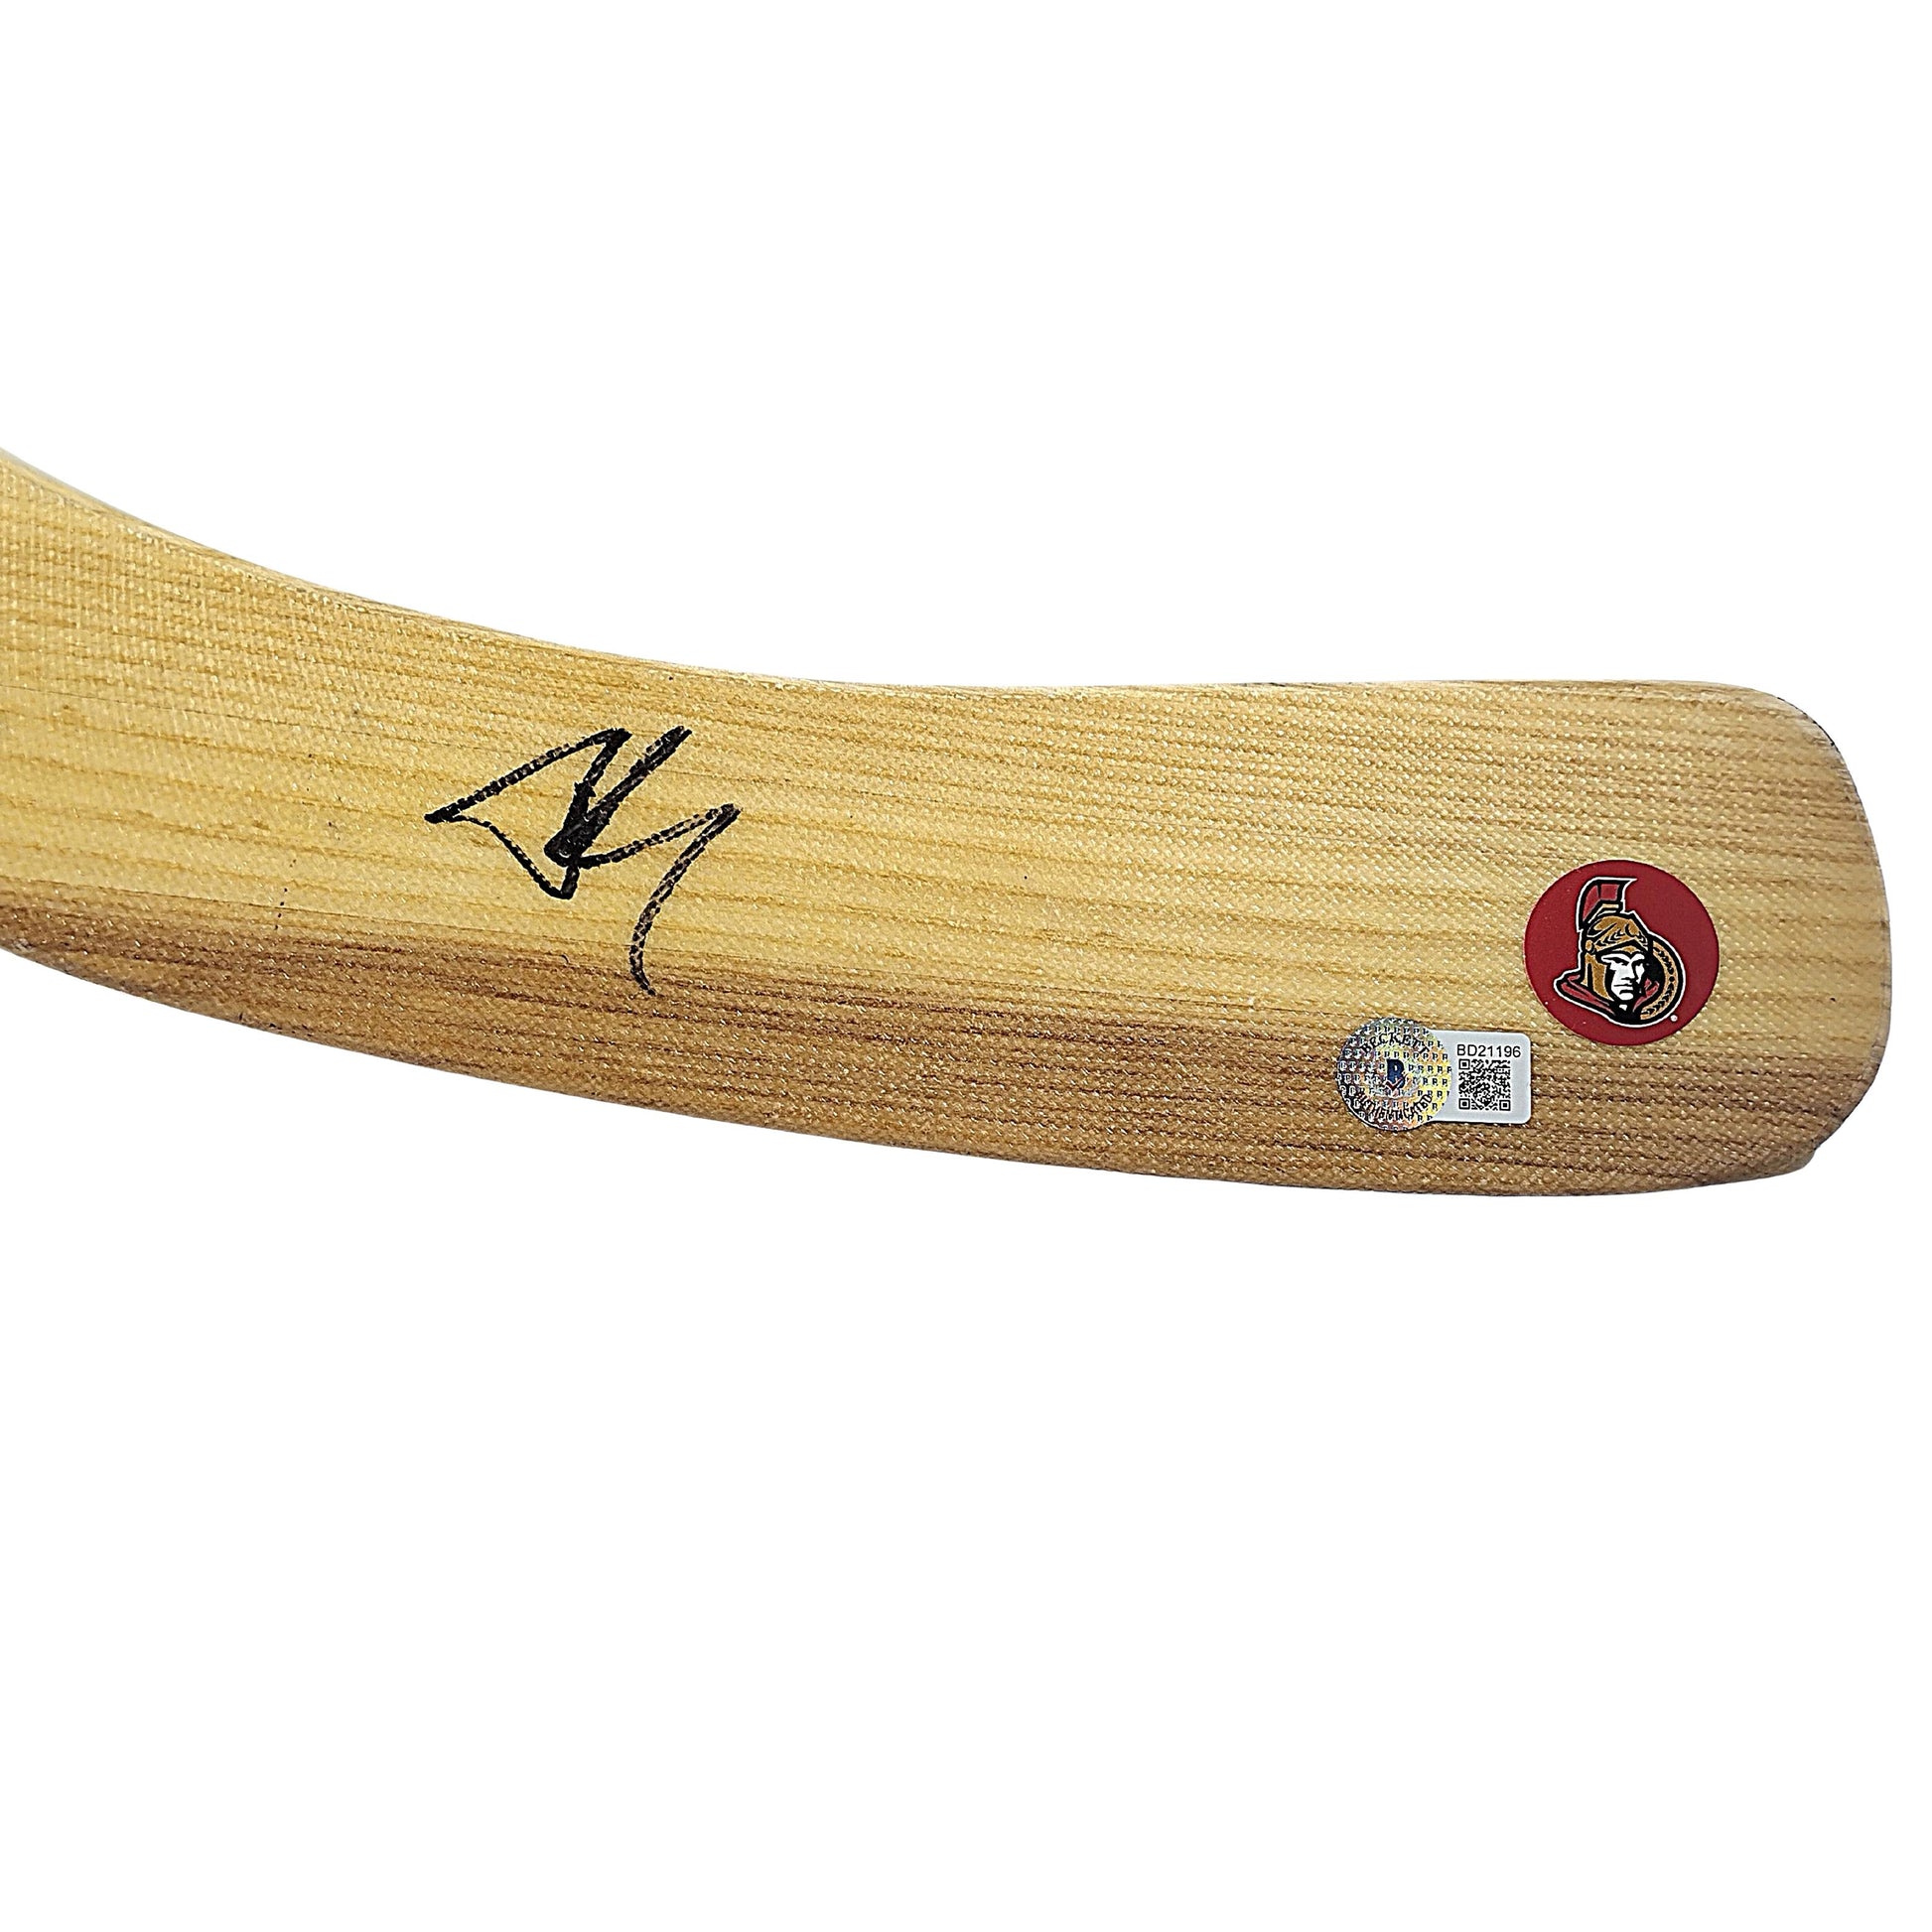 Hockey- Autographed- Brady Tkachuk Signed Ottawa Senators Hockey Stick Blade Exact Proof Beckett Authentication 103